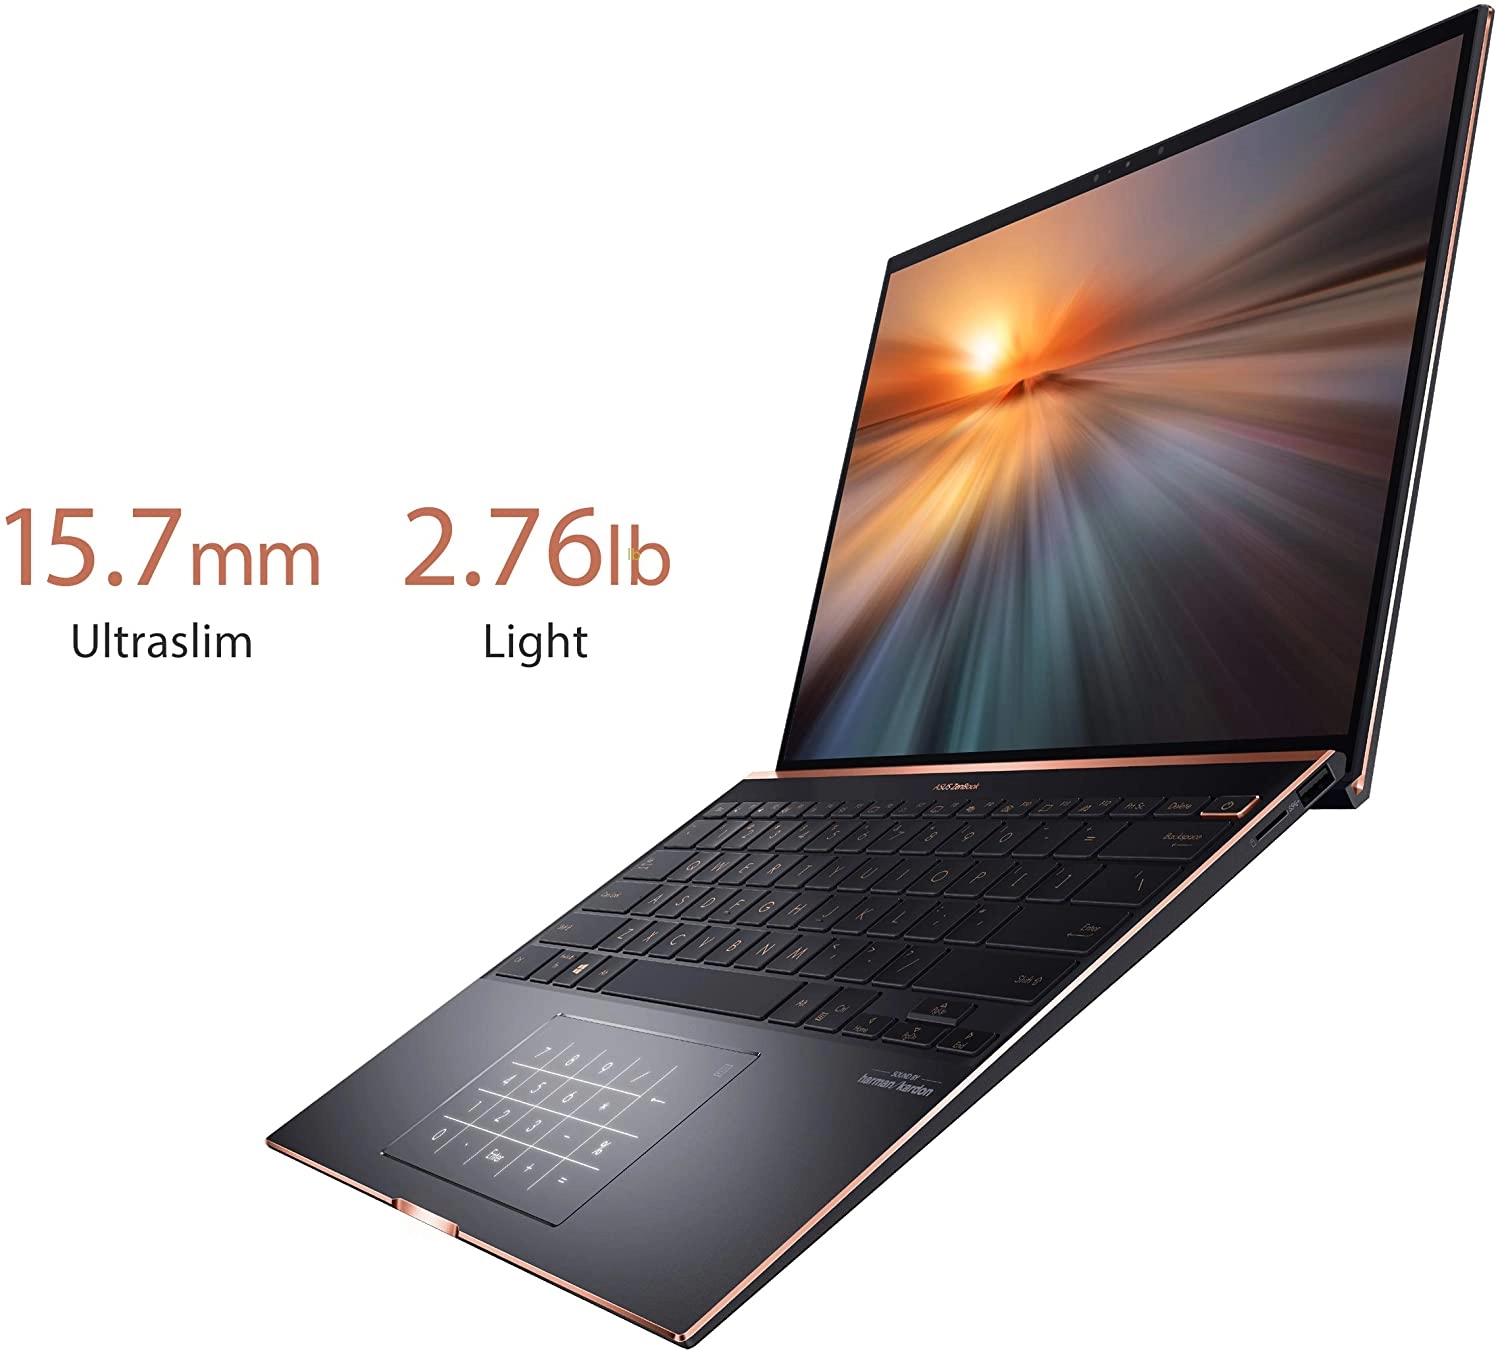 Asus ZenBook S laptop image